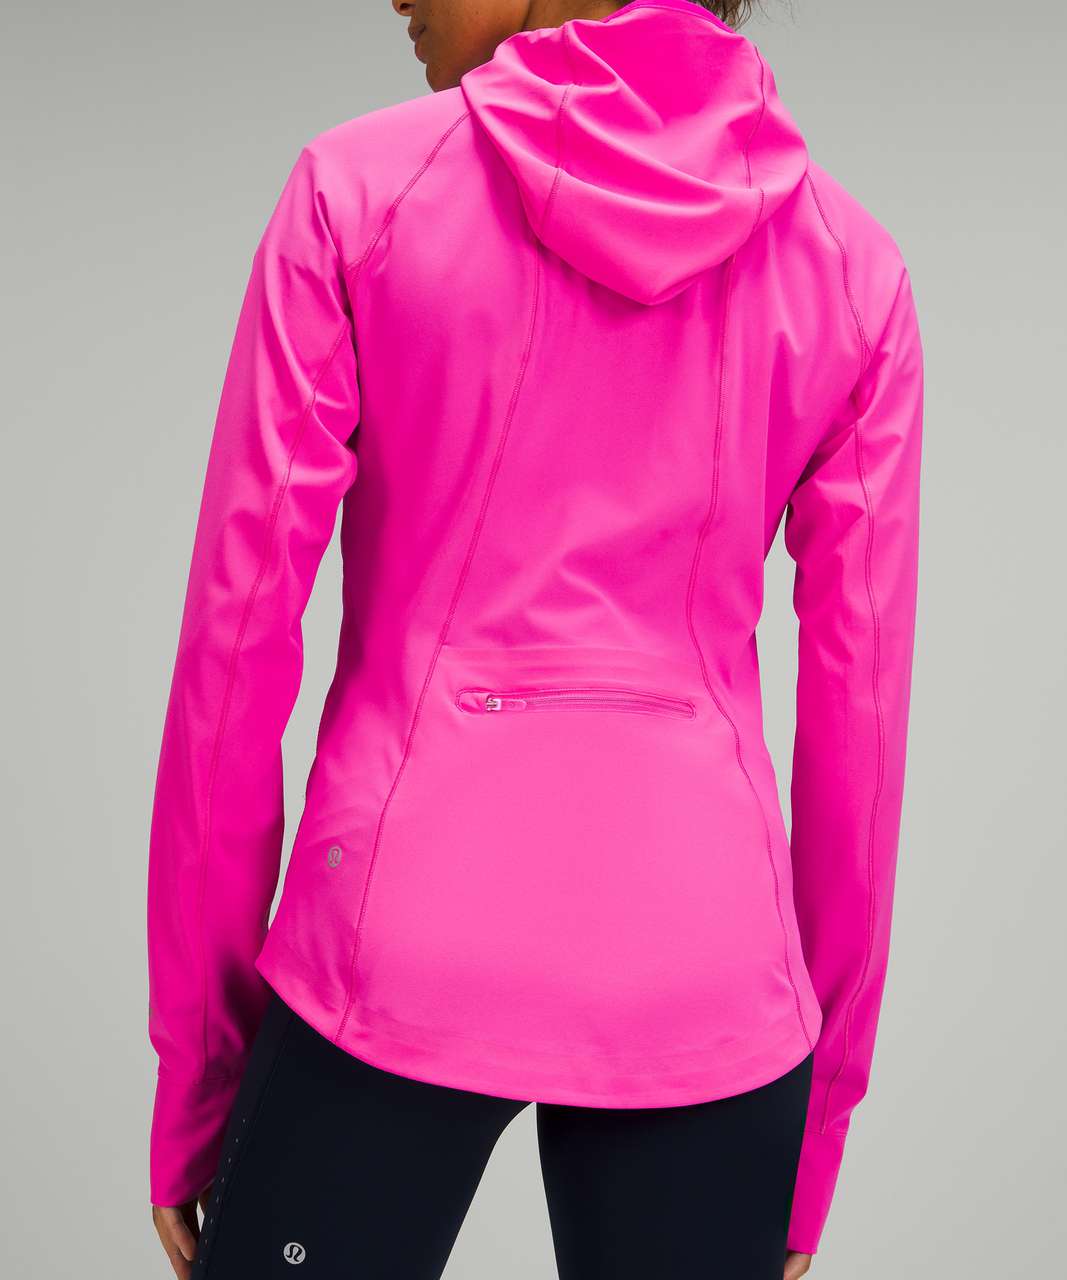 Lululemon Mist Over Windbreaker Pink Size 2 - $85 (33% Off Retail